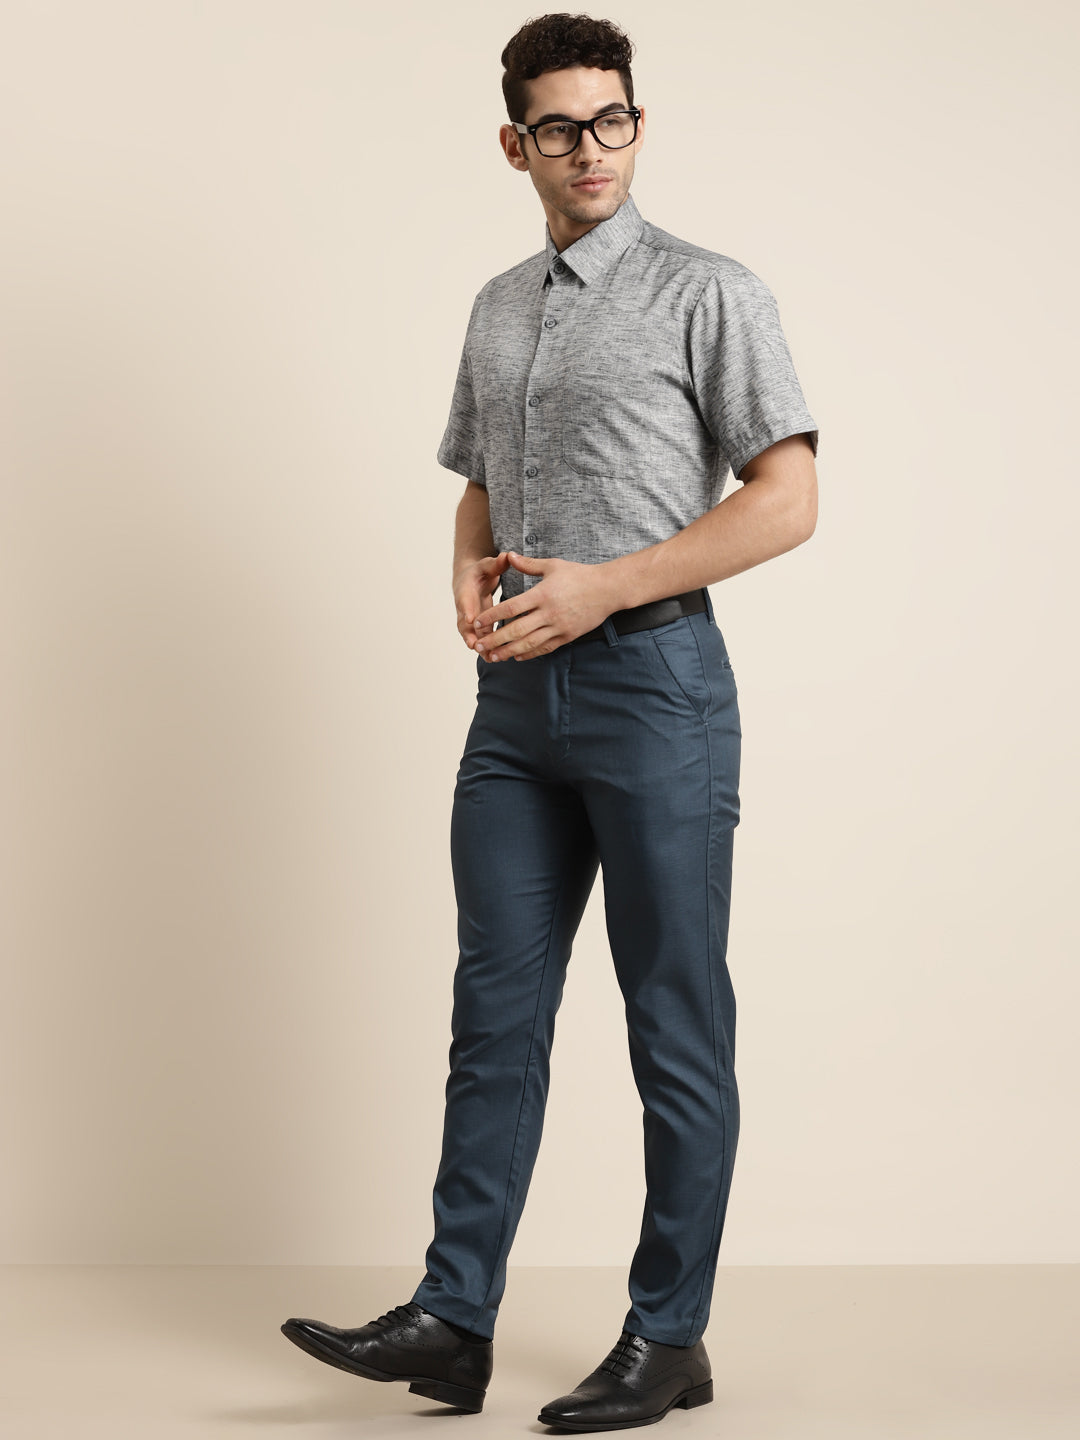 Men's Cotton Blend Grey Half sleeves Casual Shirt